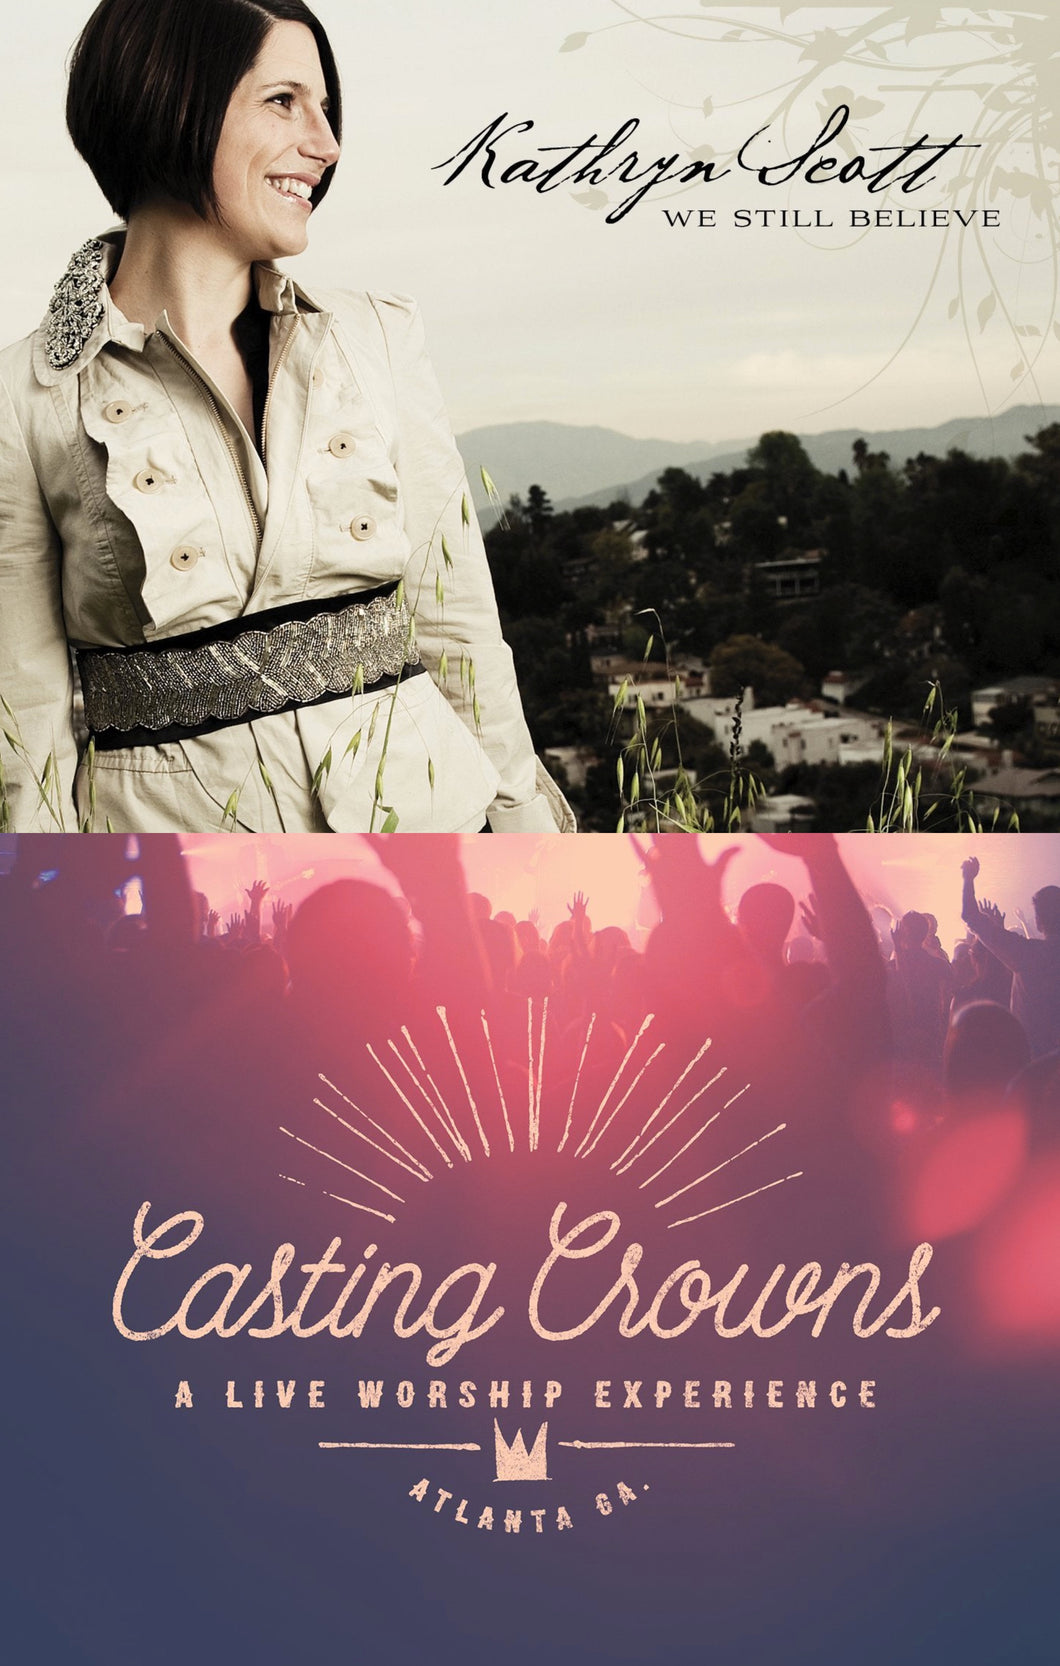 Kathryn Scott We Still Believe + Casting Crowns Live Worship Experience 2CD